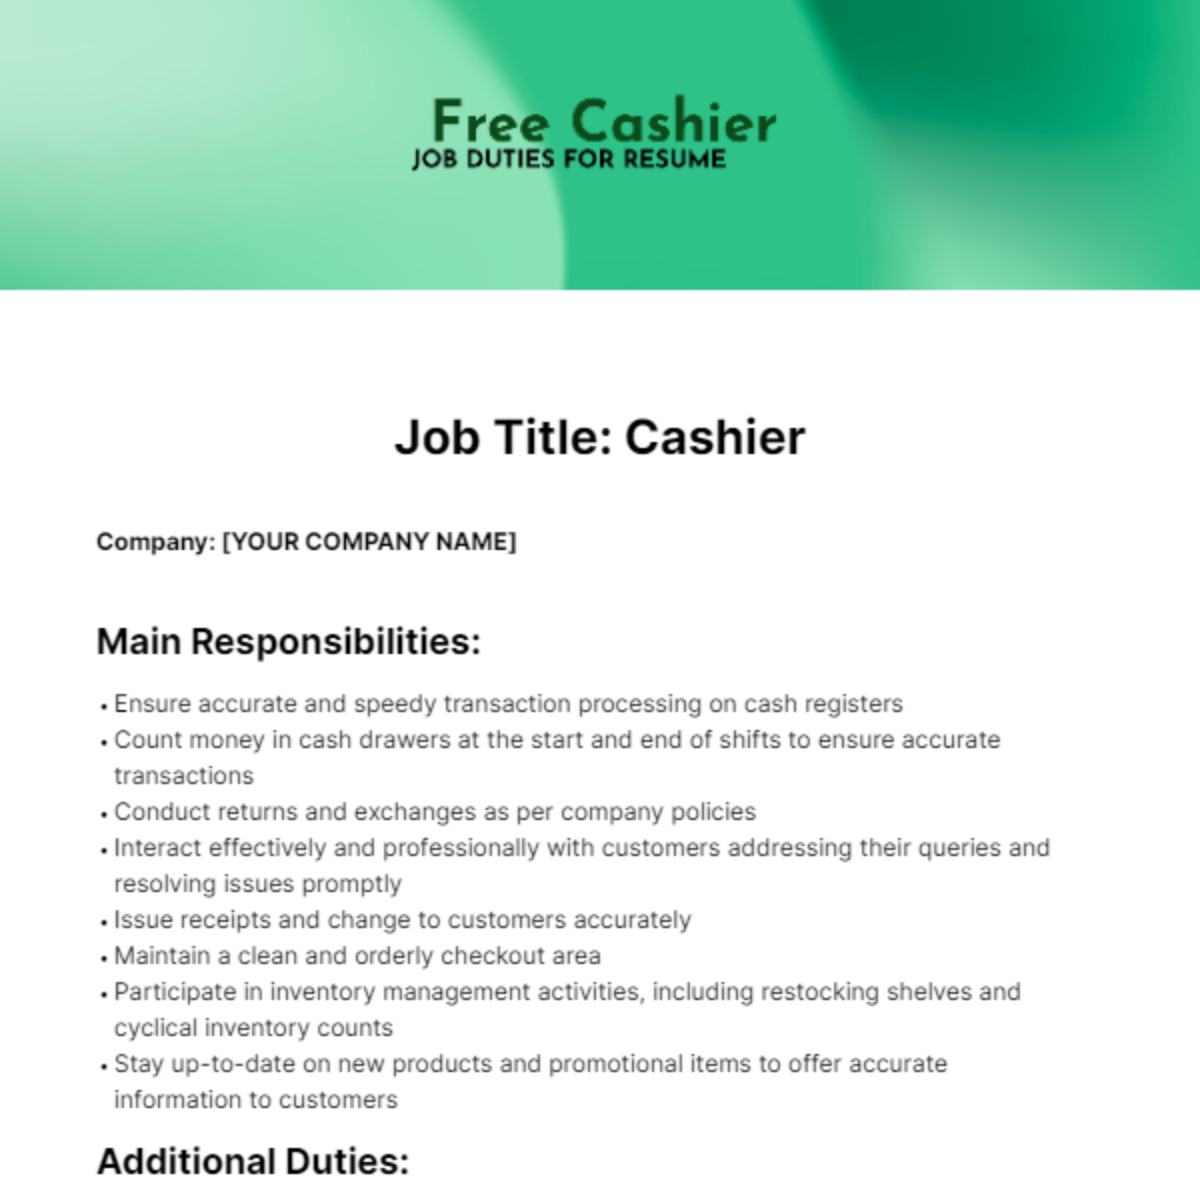 Free Cashier Job Duties for Resume Template